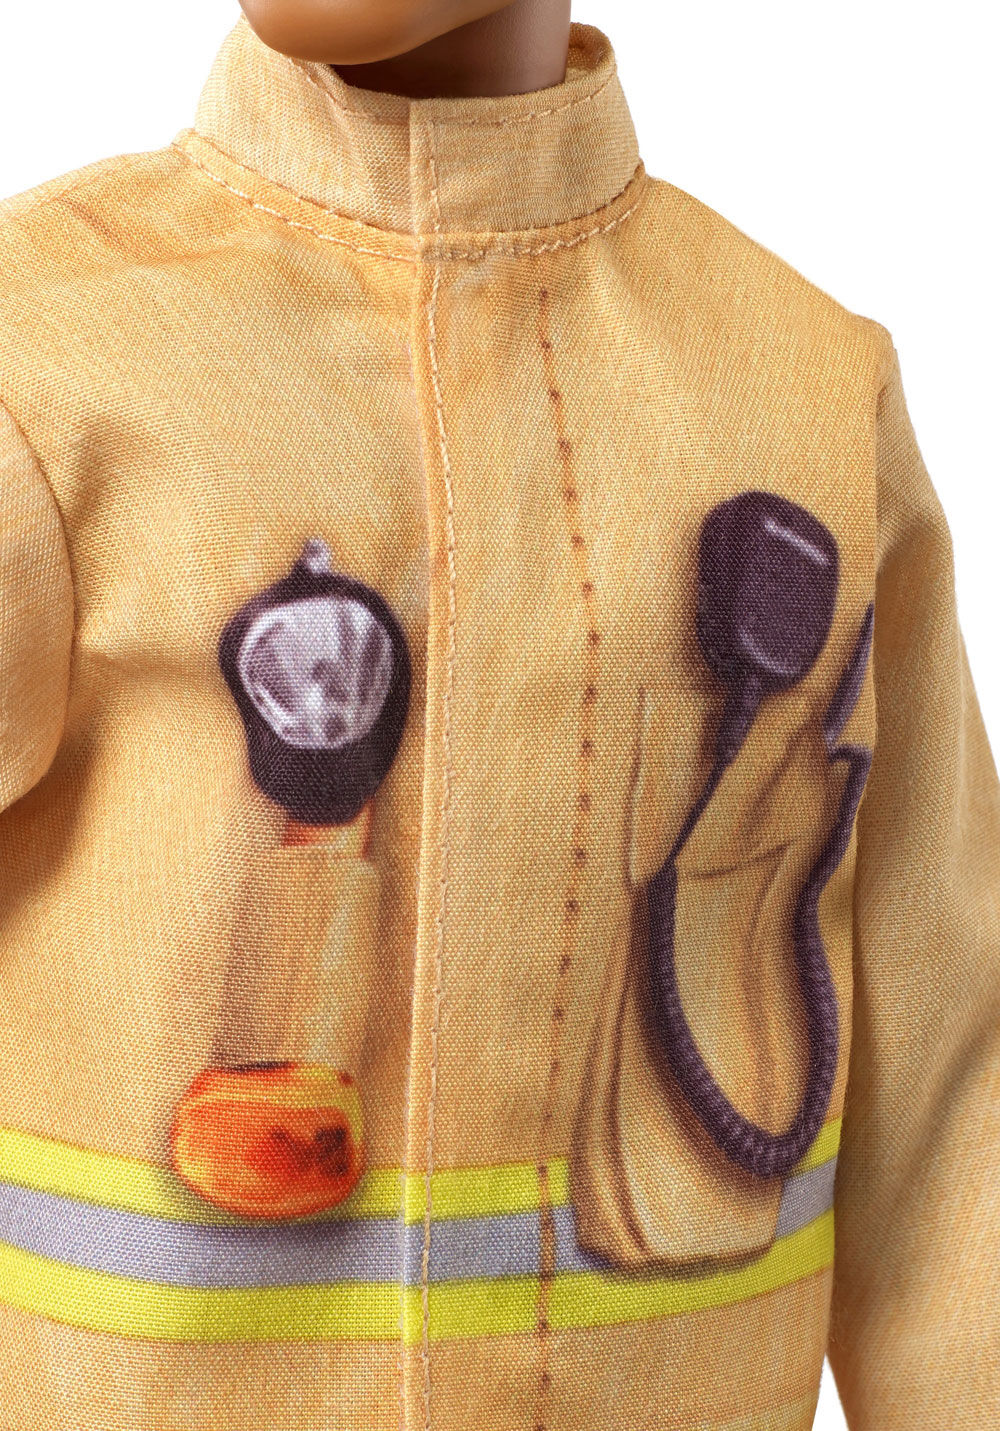 firefighter ken doll